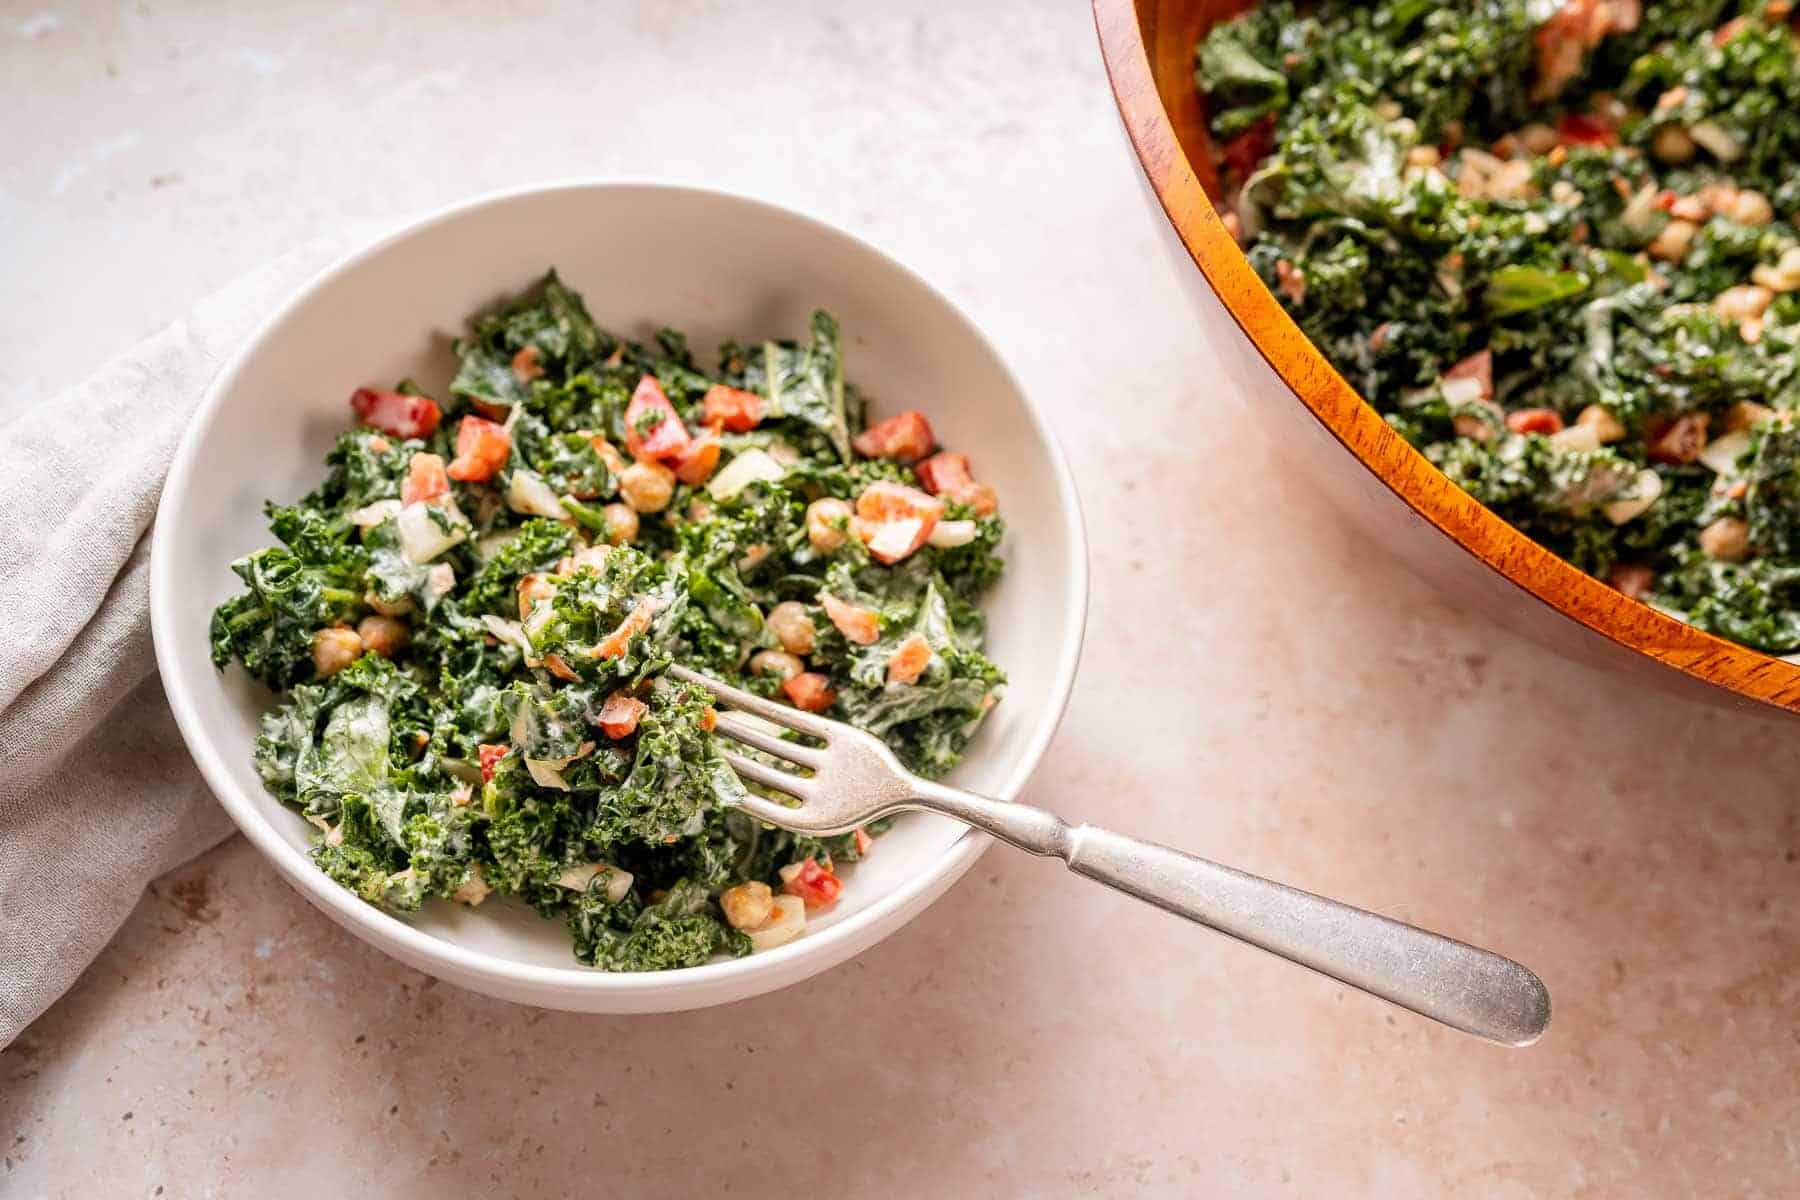 Kale chickpea salad with tahini dresssing.